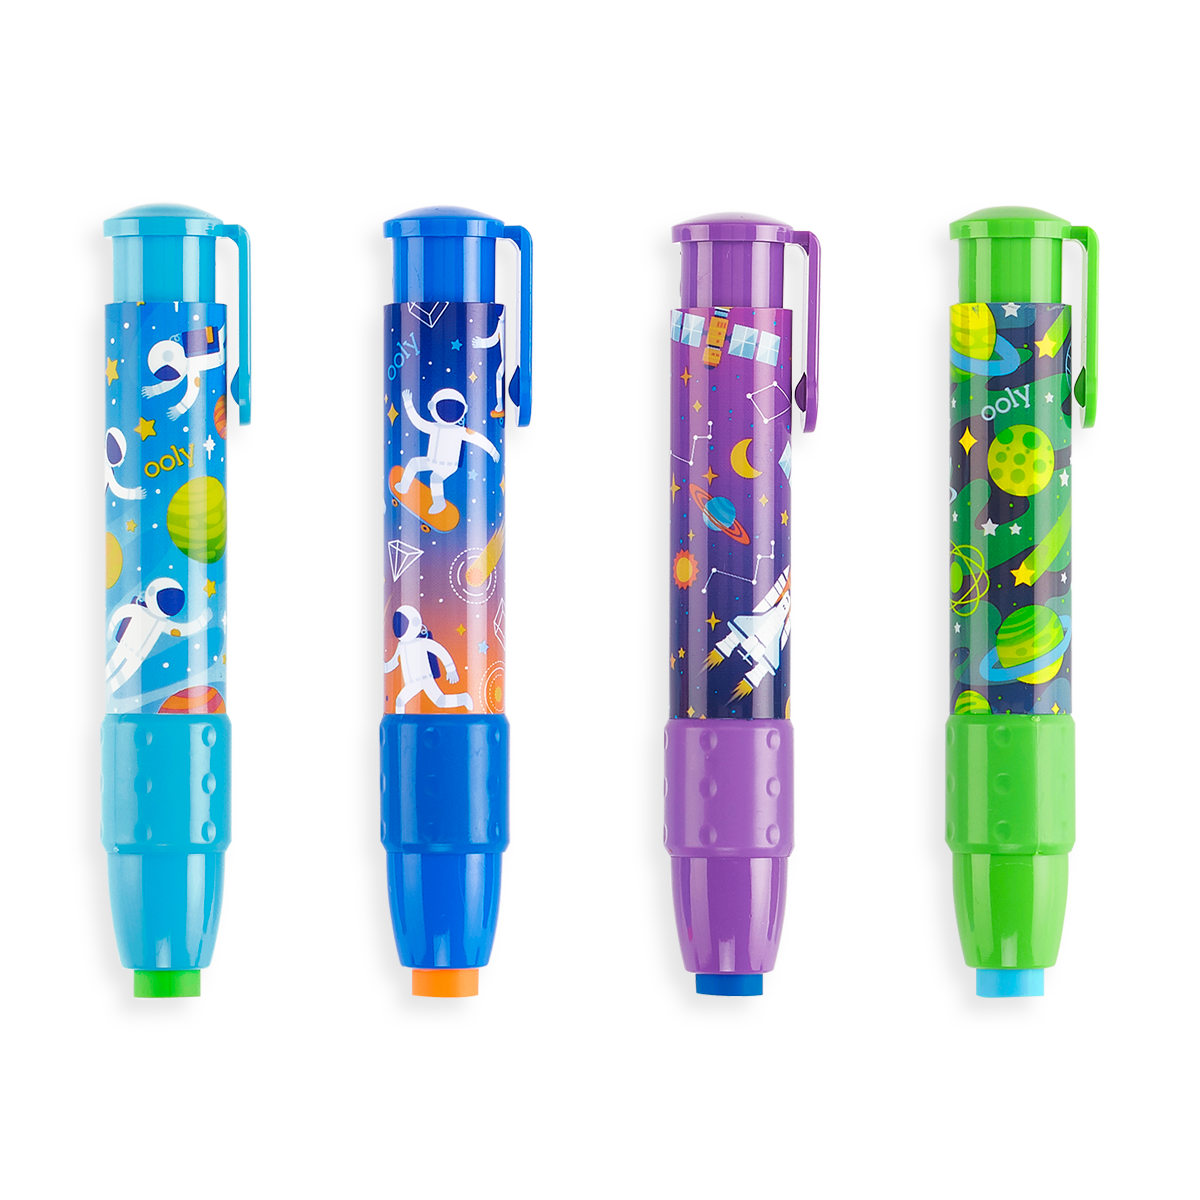 Astronaut ClickIt Eraser, 4 designs in a row.